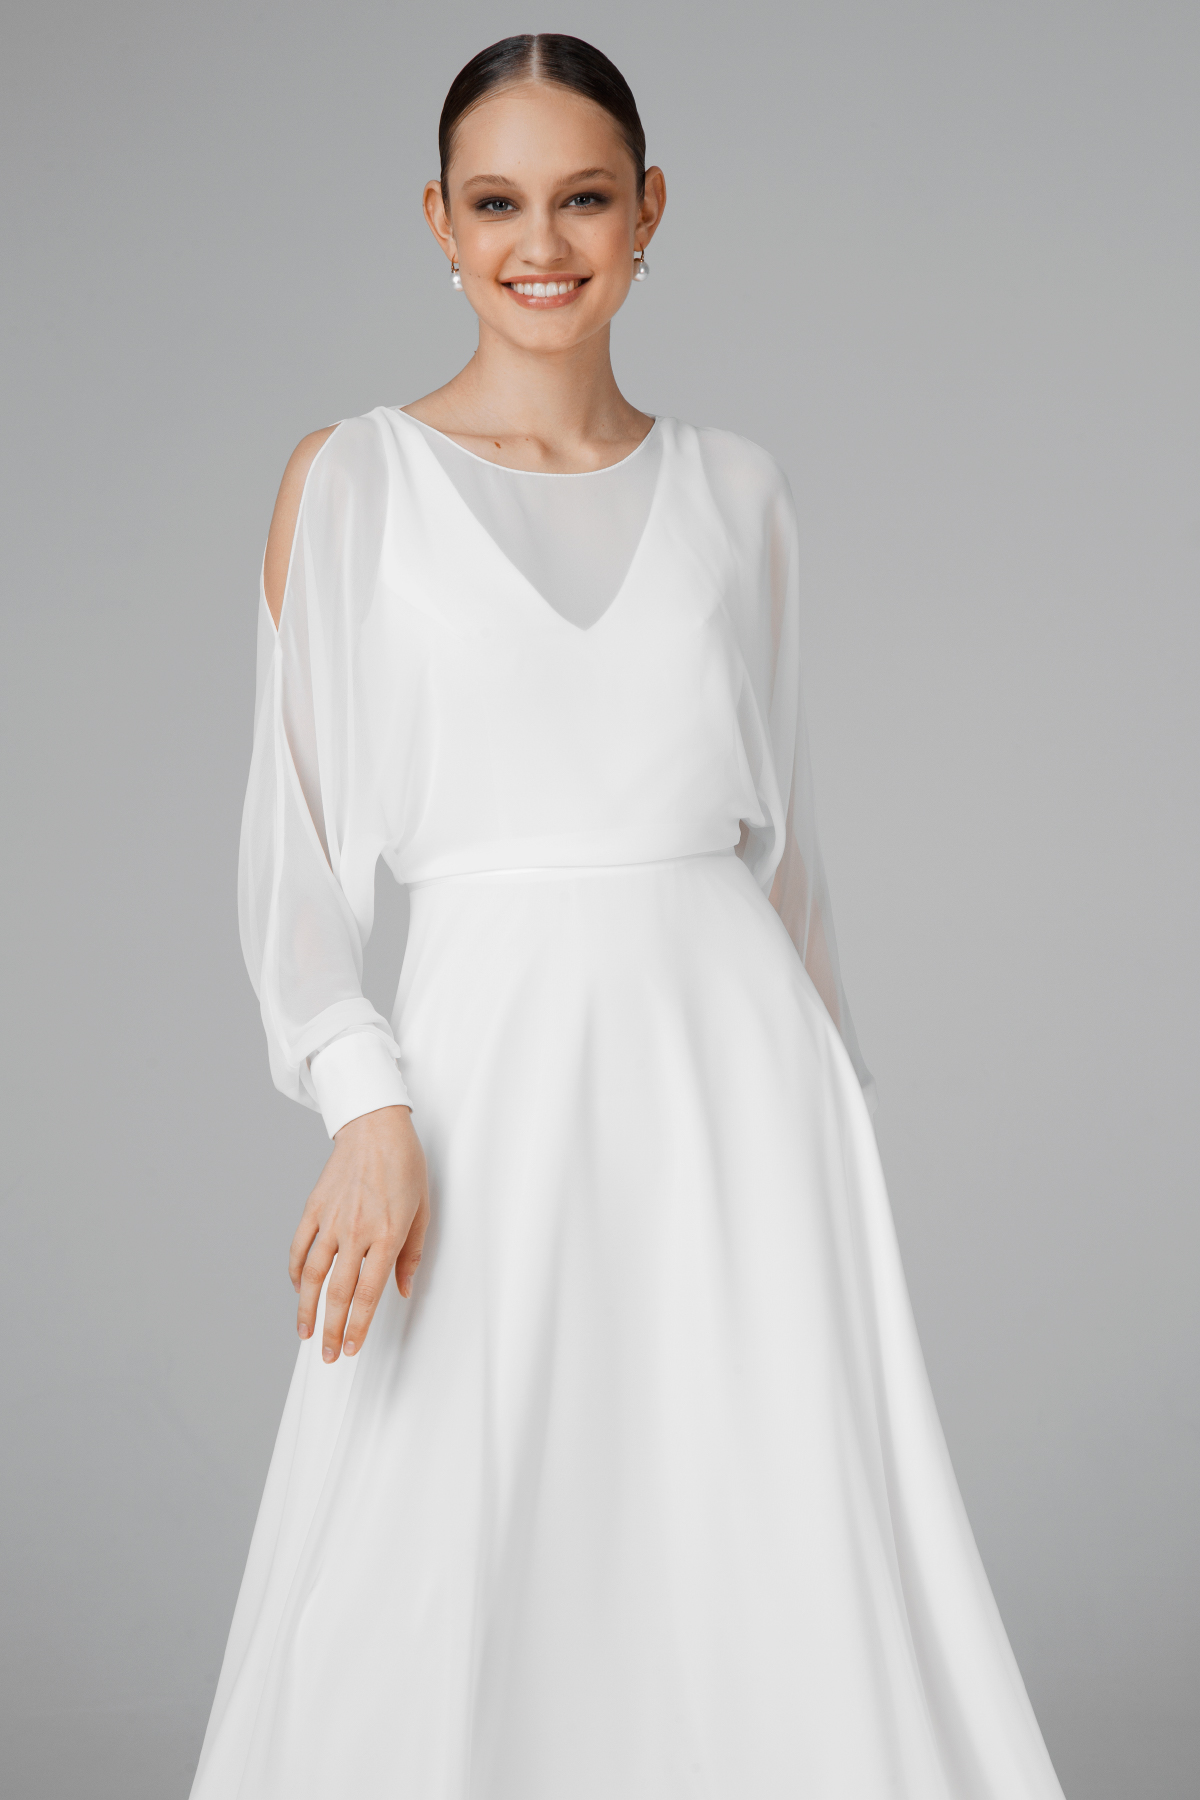 Simple long sleeve wedding dress